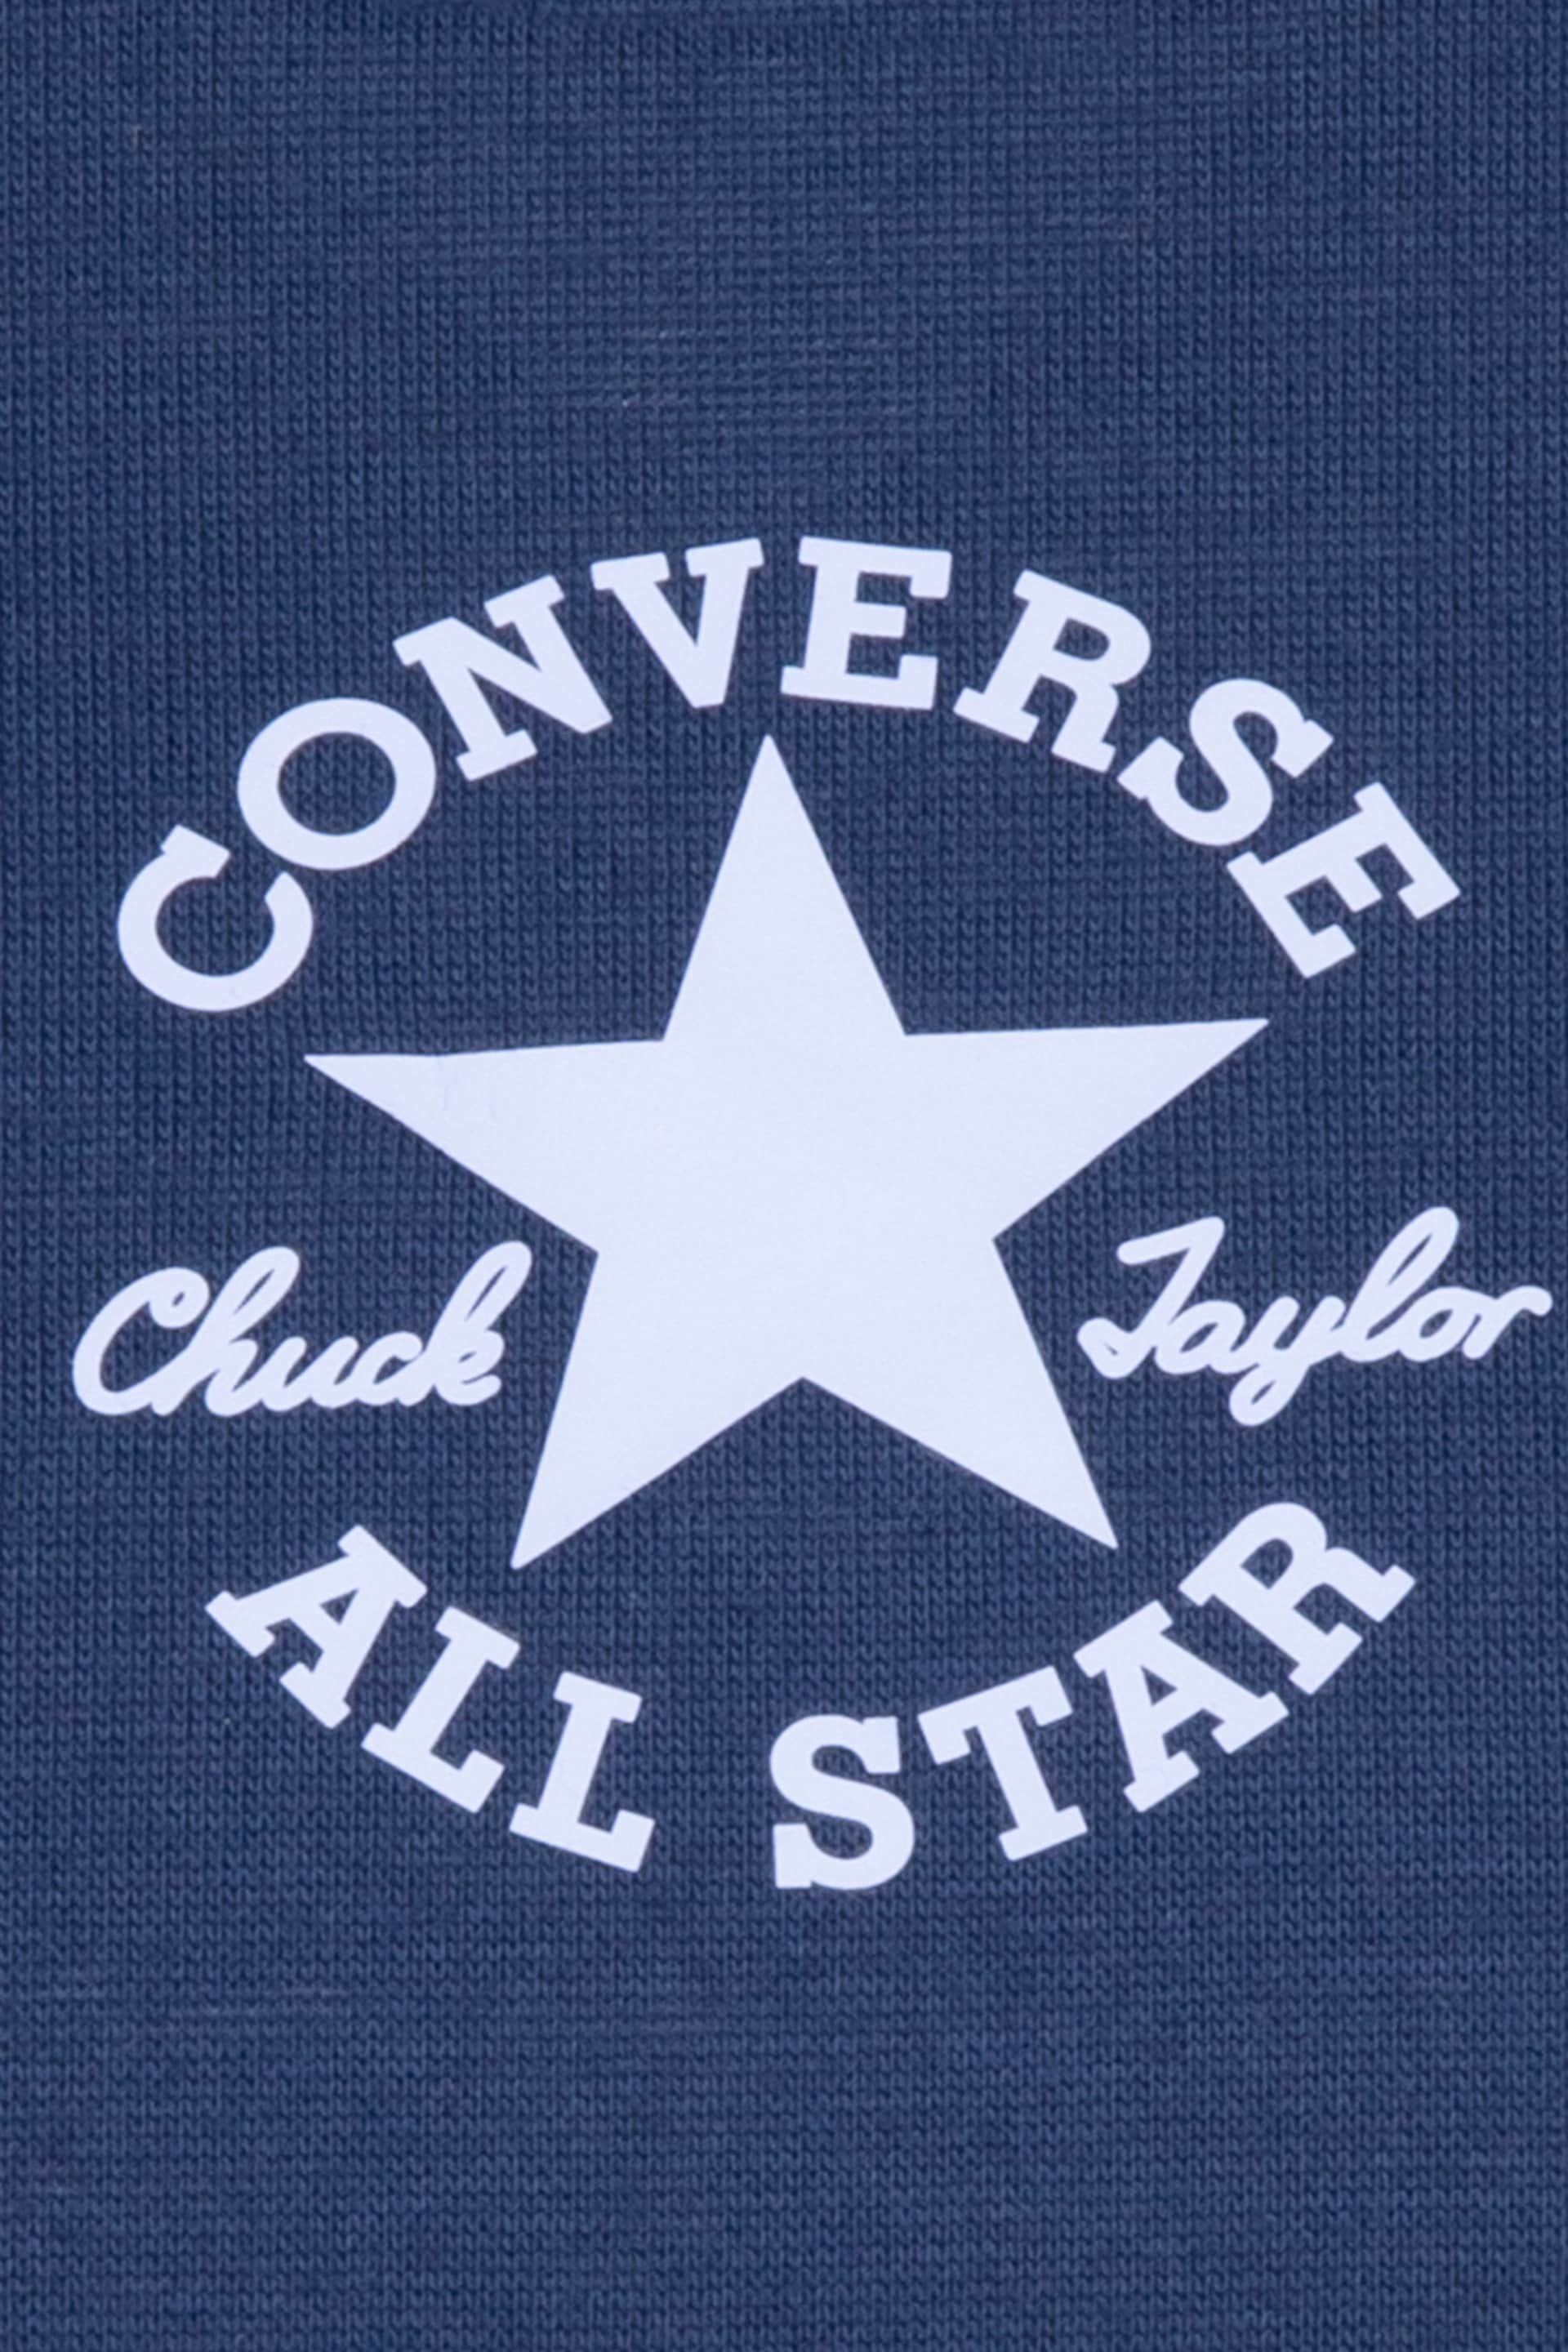 Converse Navy Logo Long Sleeve T-Shirt - Image 3 of 4